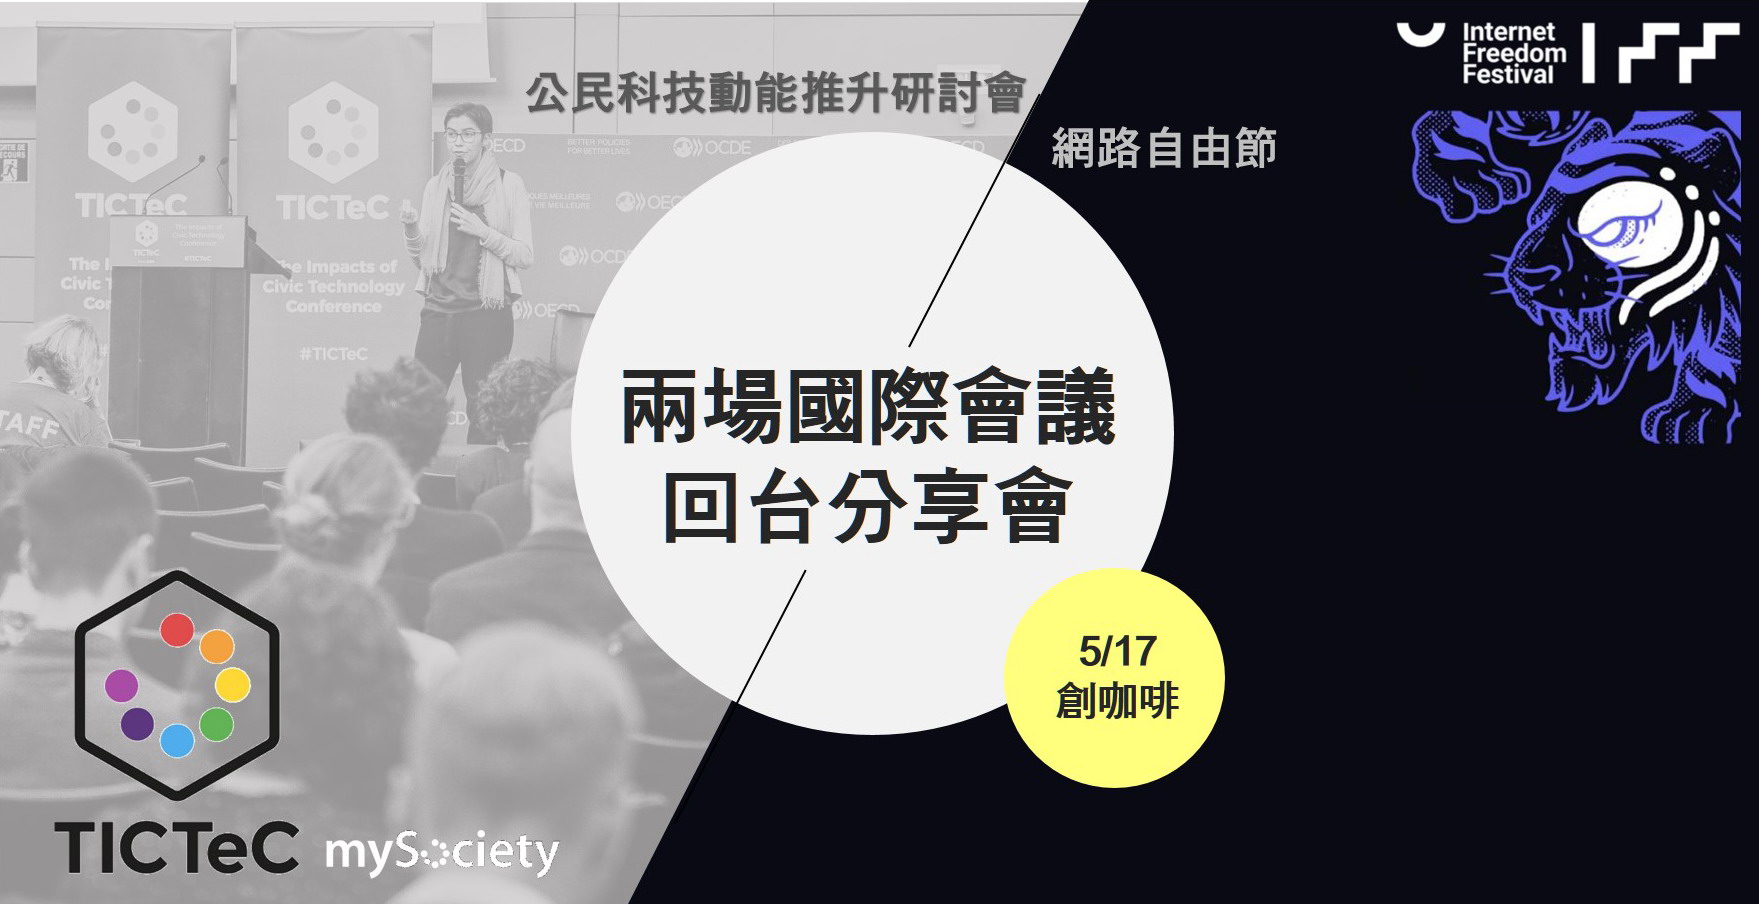 Event cover image for 前進 TICTeC & Internet Freedom Festival ( IFF ) 共同分享會